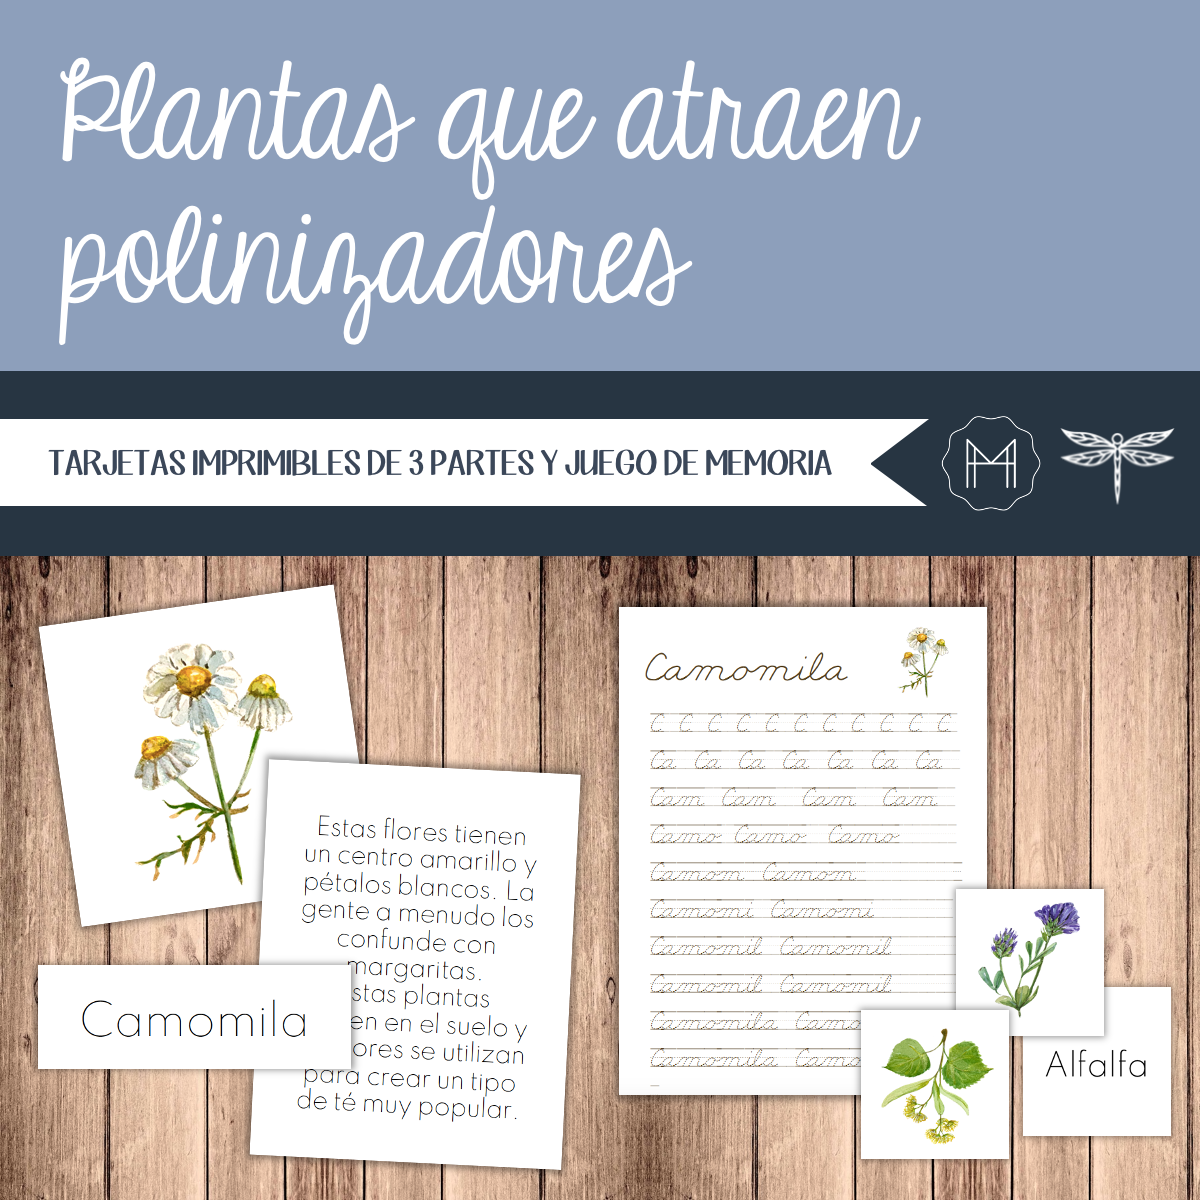 Español - Plantas que atraen polinizadores